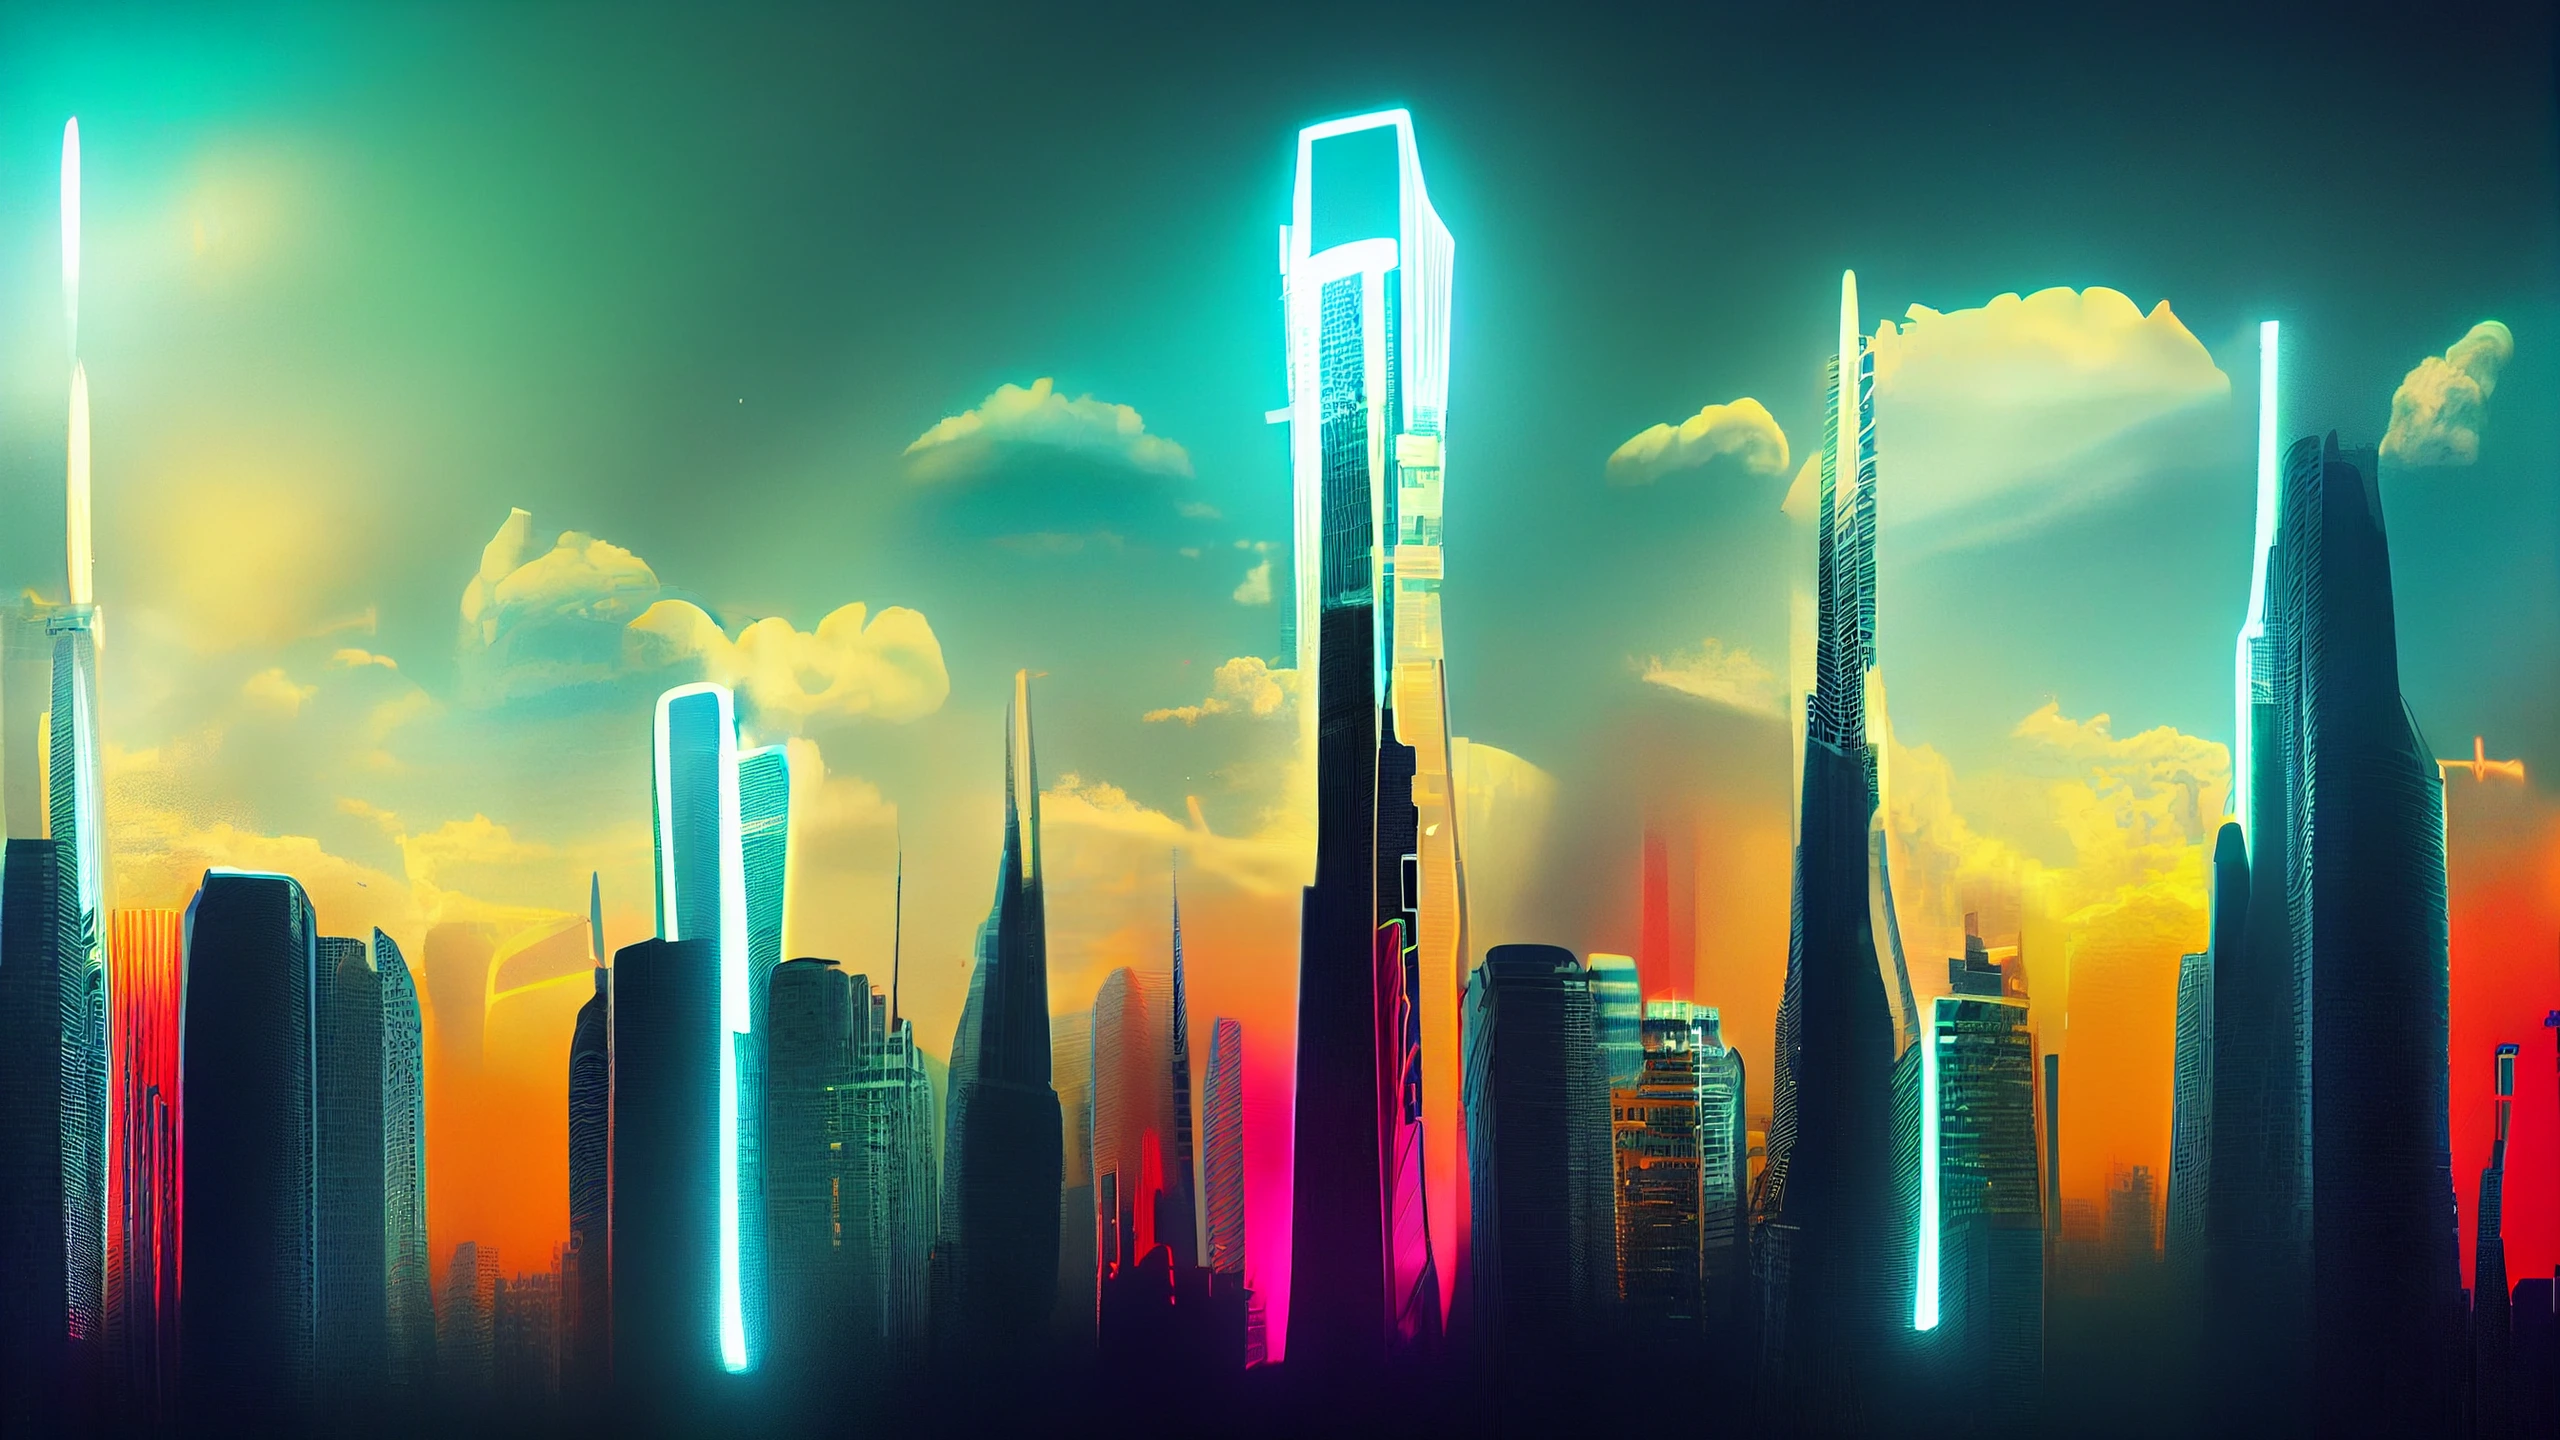 A very futuristic-looking metropolis.